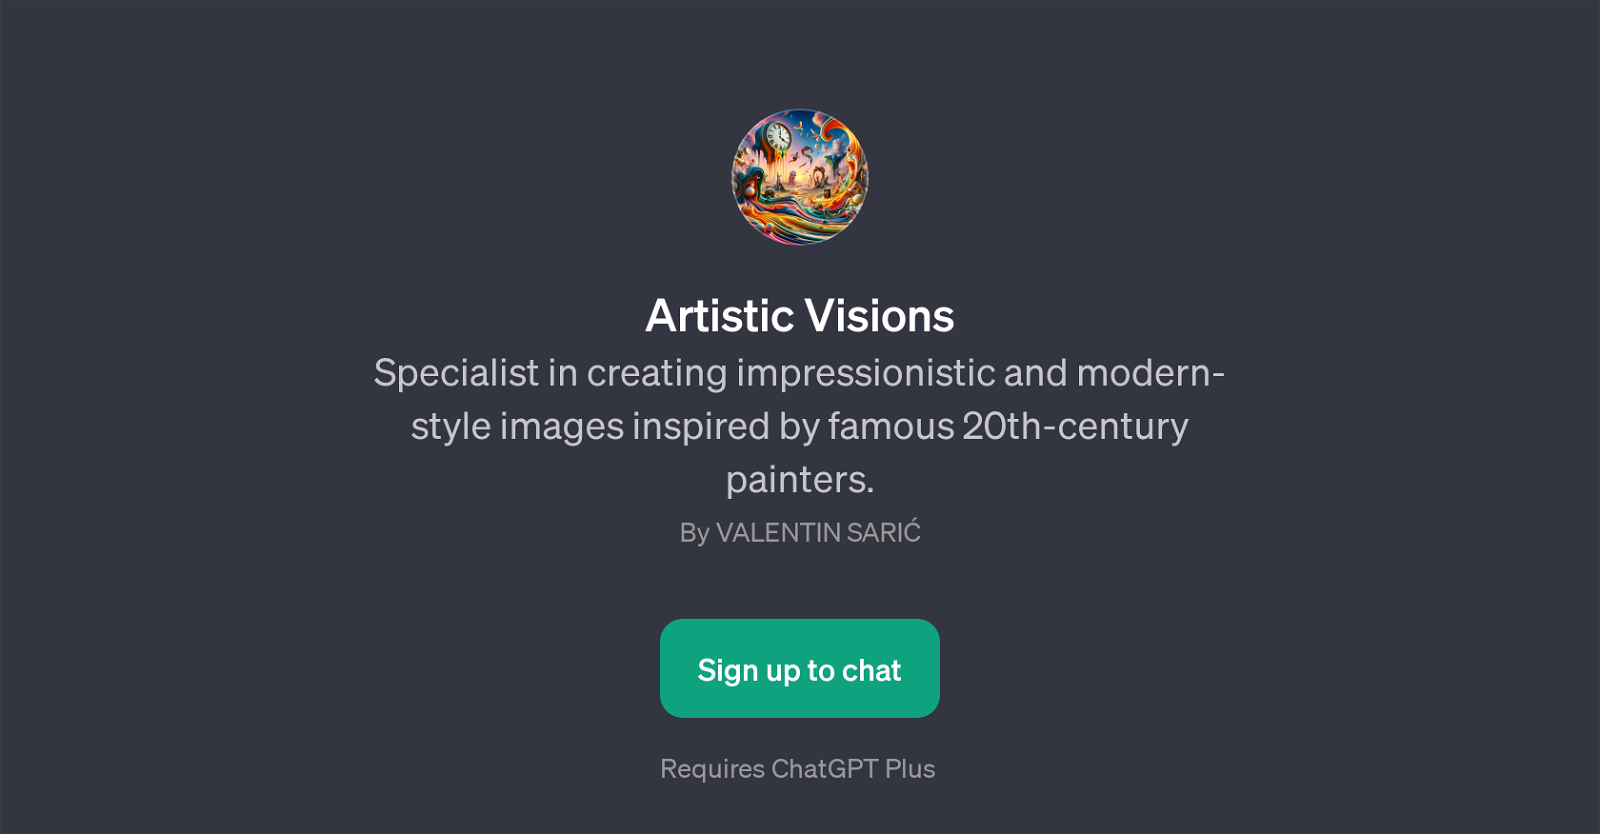 Artistic Visions website